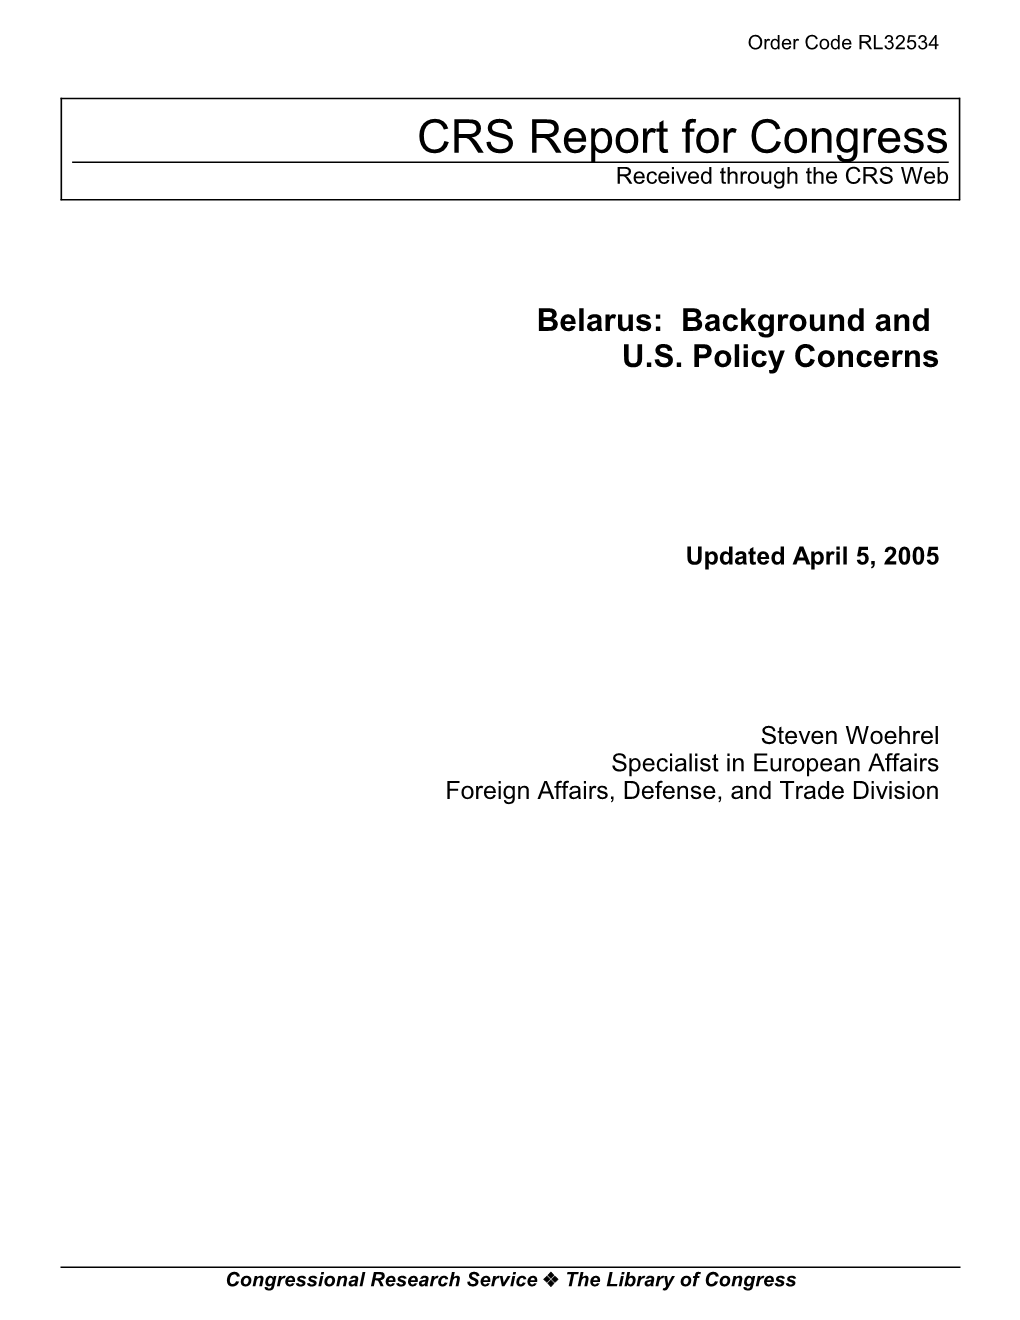 Belarus: Background and U.S